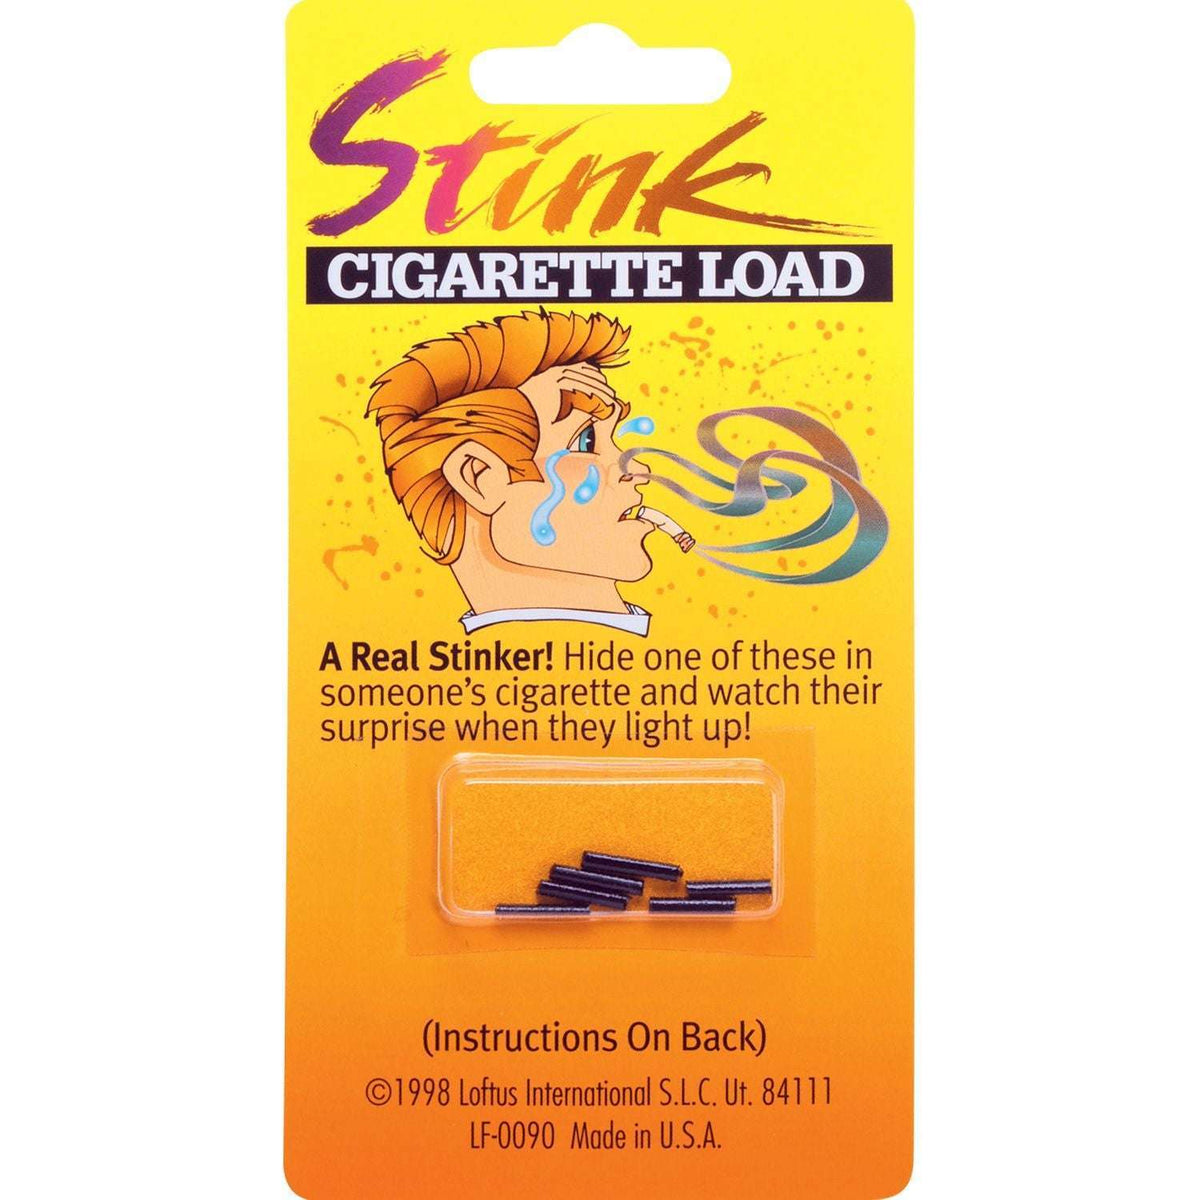 Stink Cigarette Loads Prank